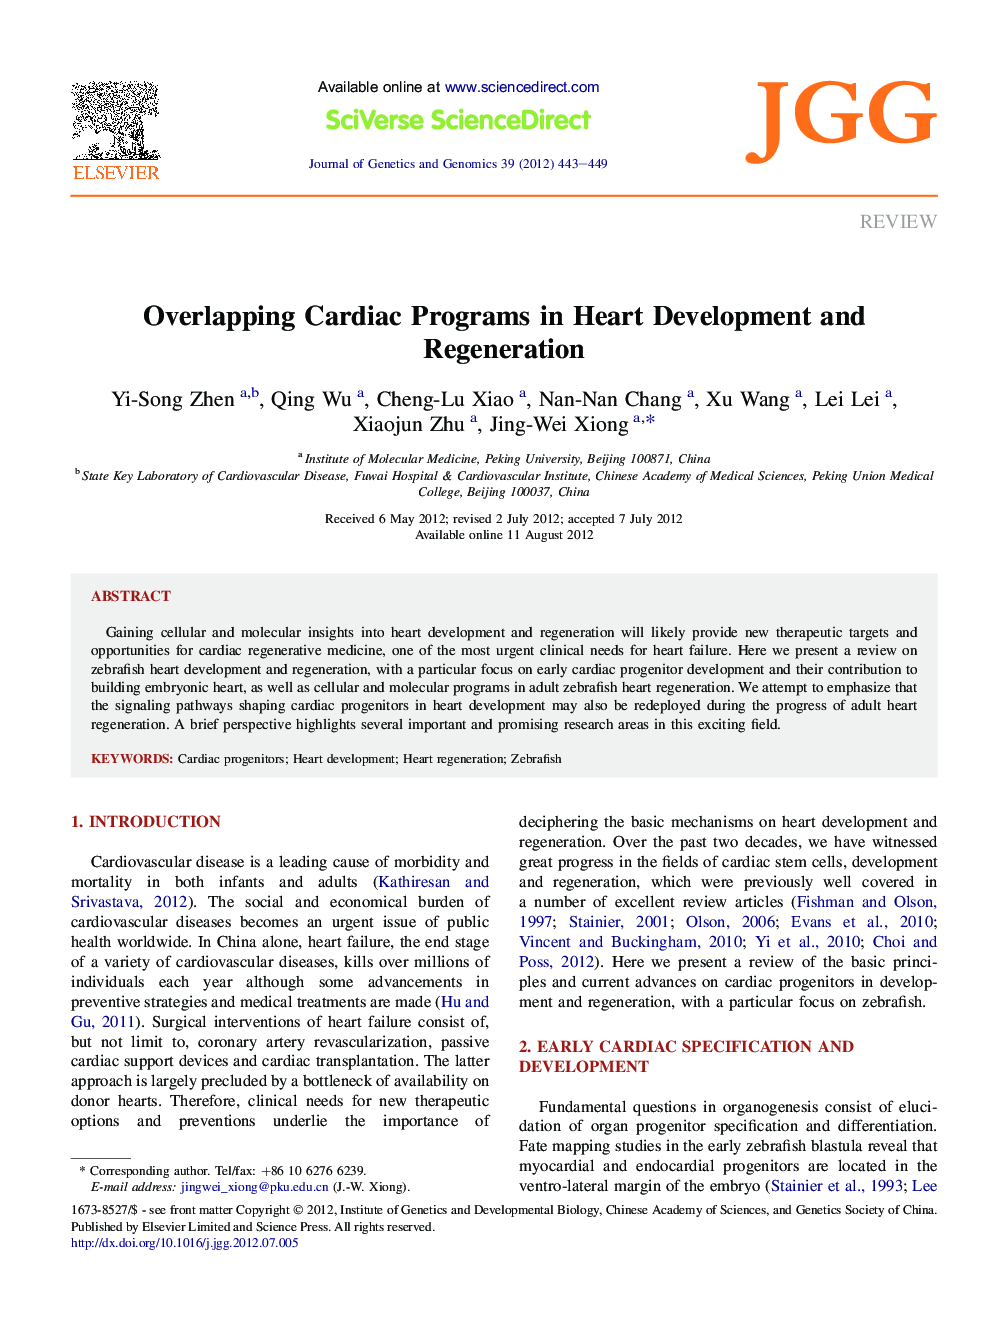 Overlapping Cardiac Programs in Heart Development and Regeneration